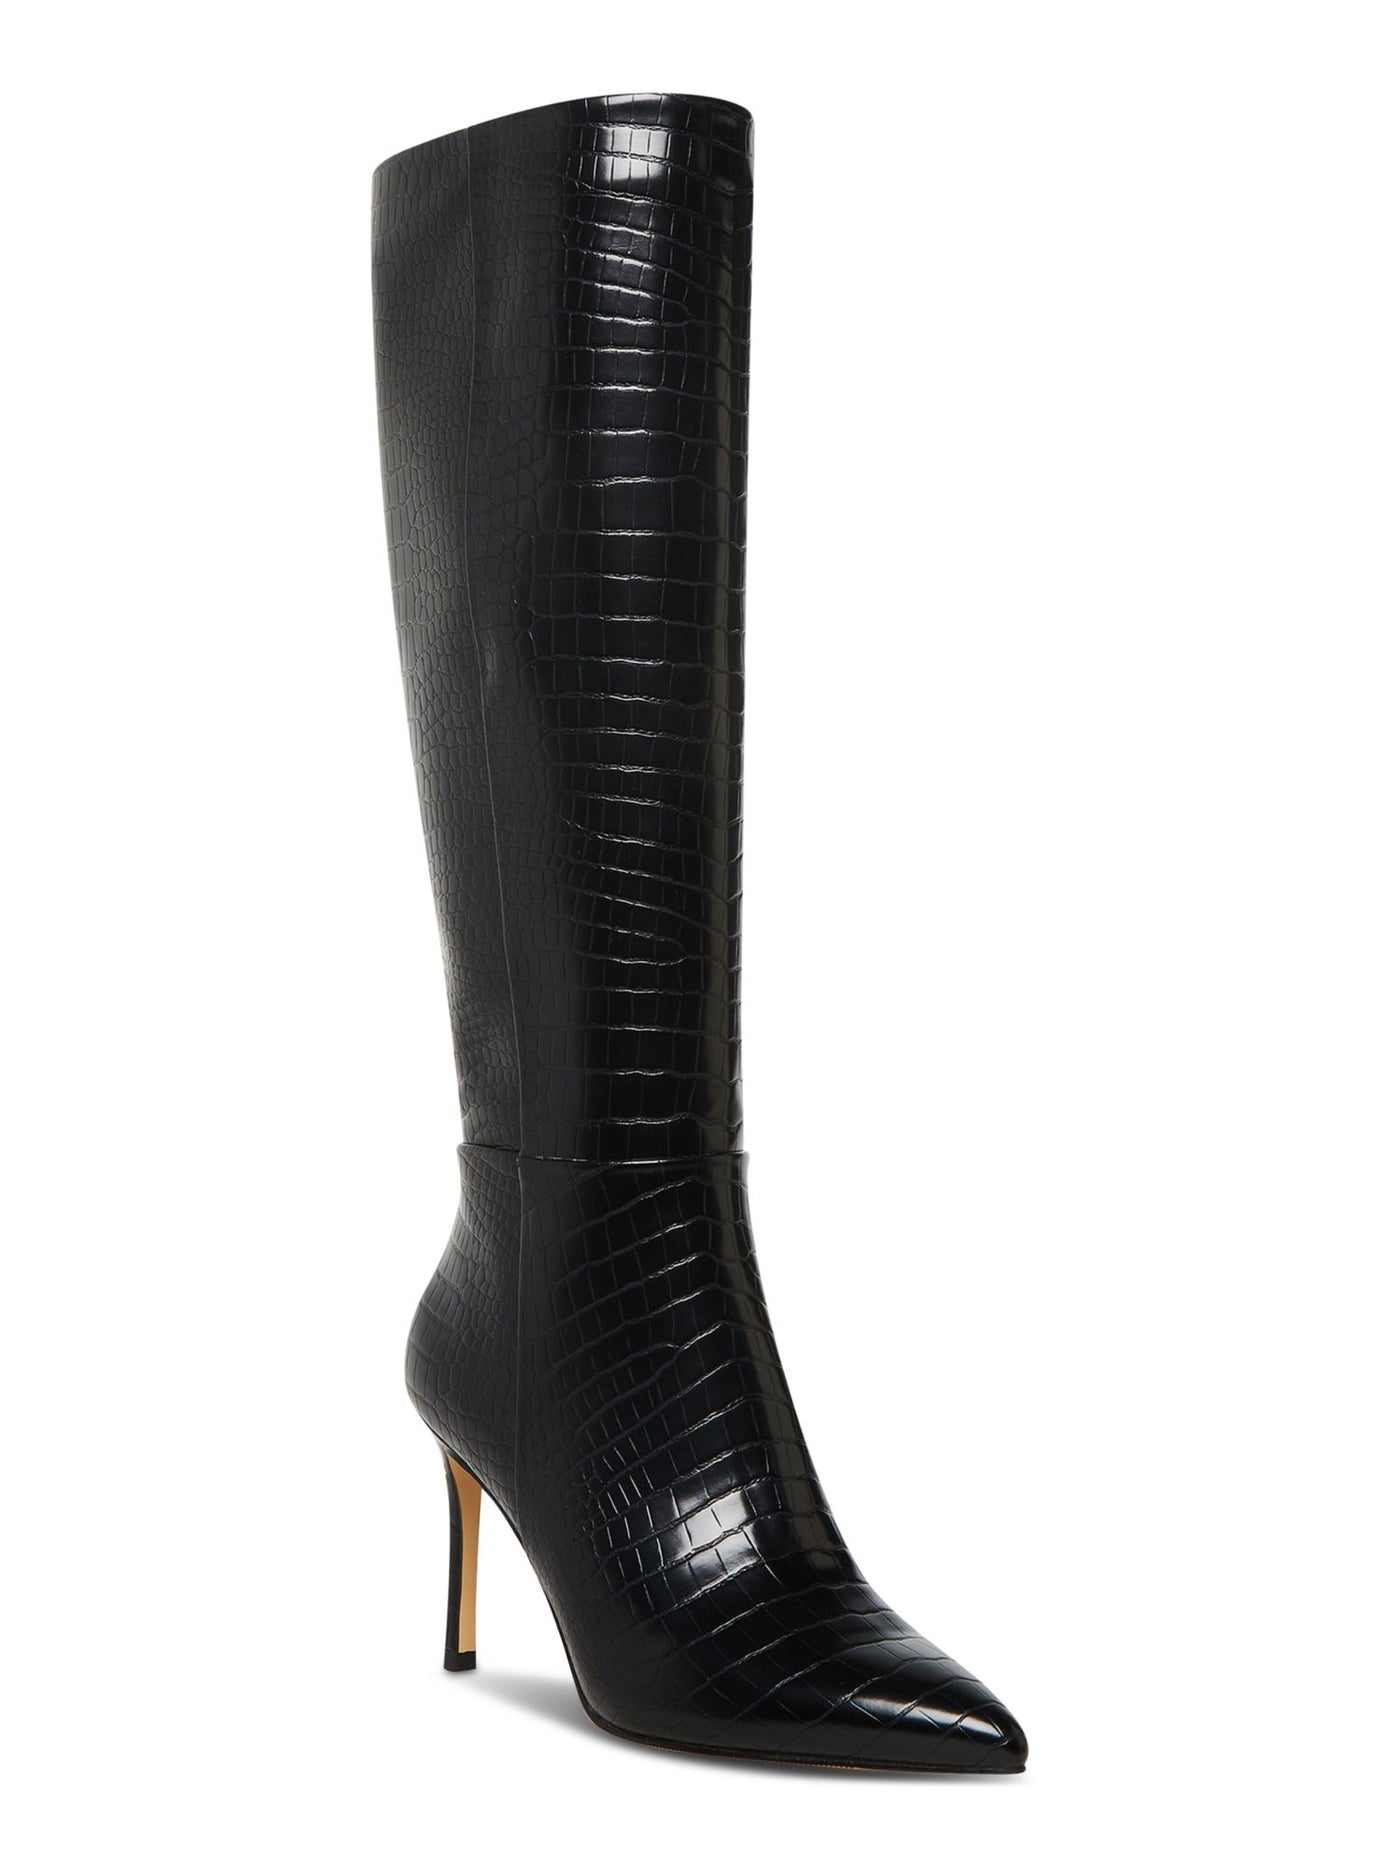 MADDEN GIRL Womens Black Animal Print Crocodile Padded Chantelle Pointed Toe Stiletto Zip-Up Dress Boots 8.5 M